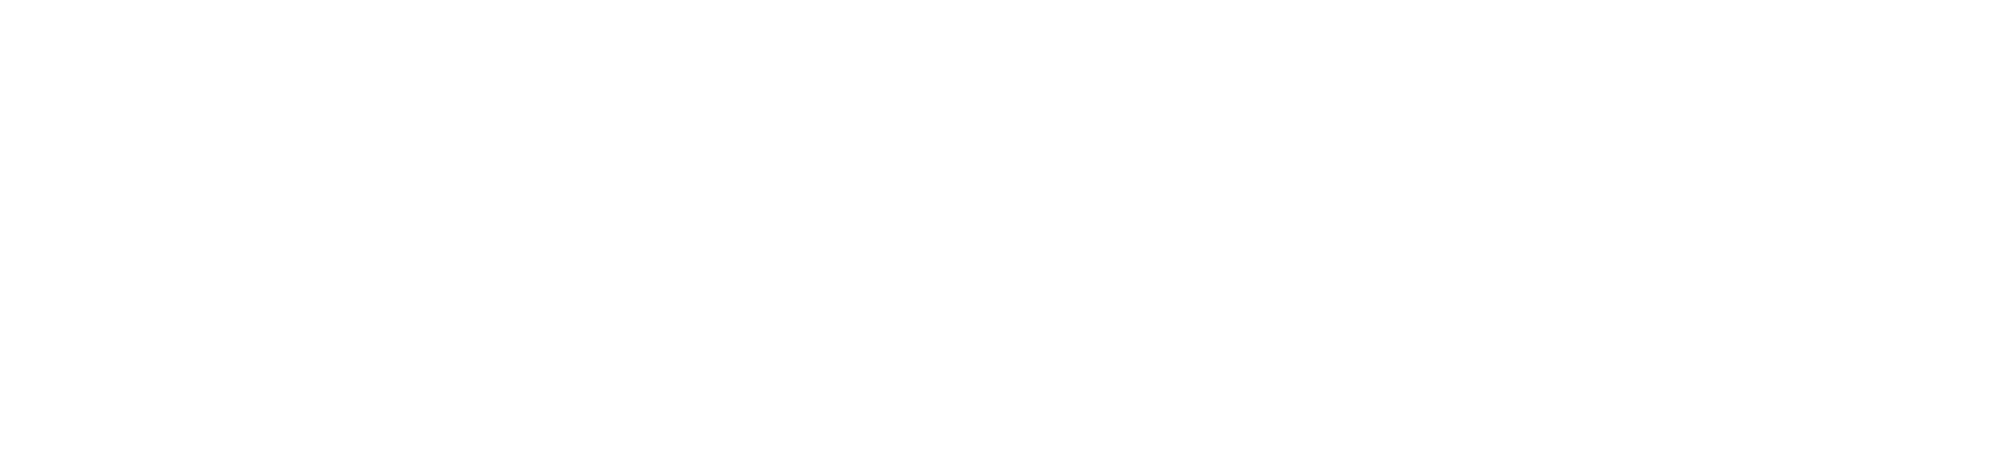 Nicholas Luck